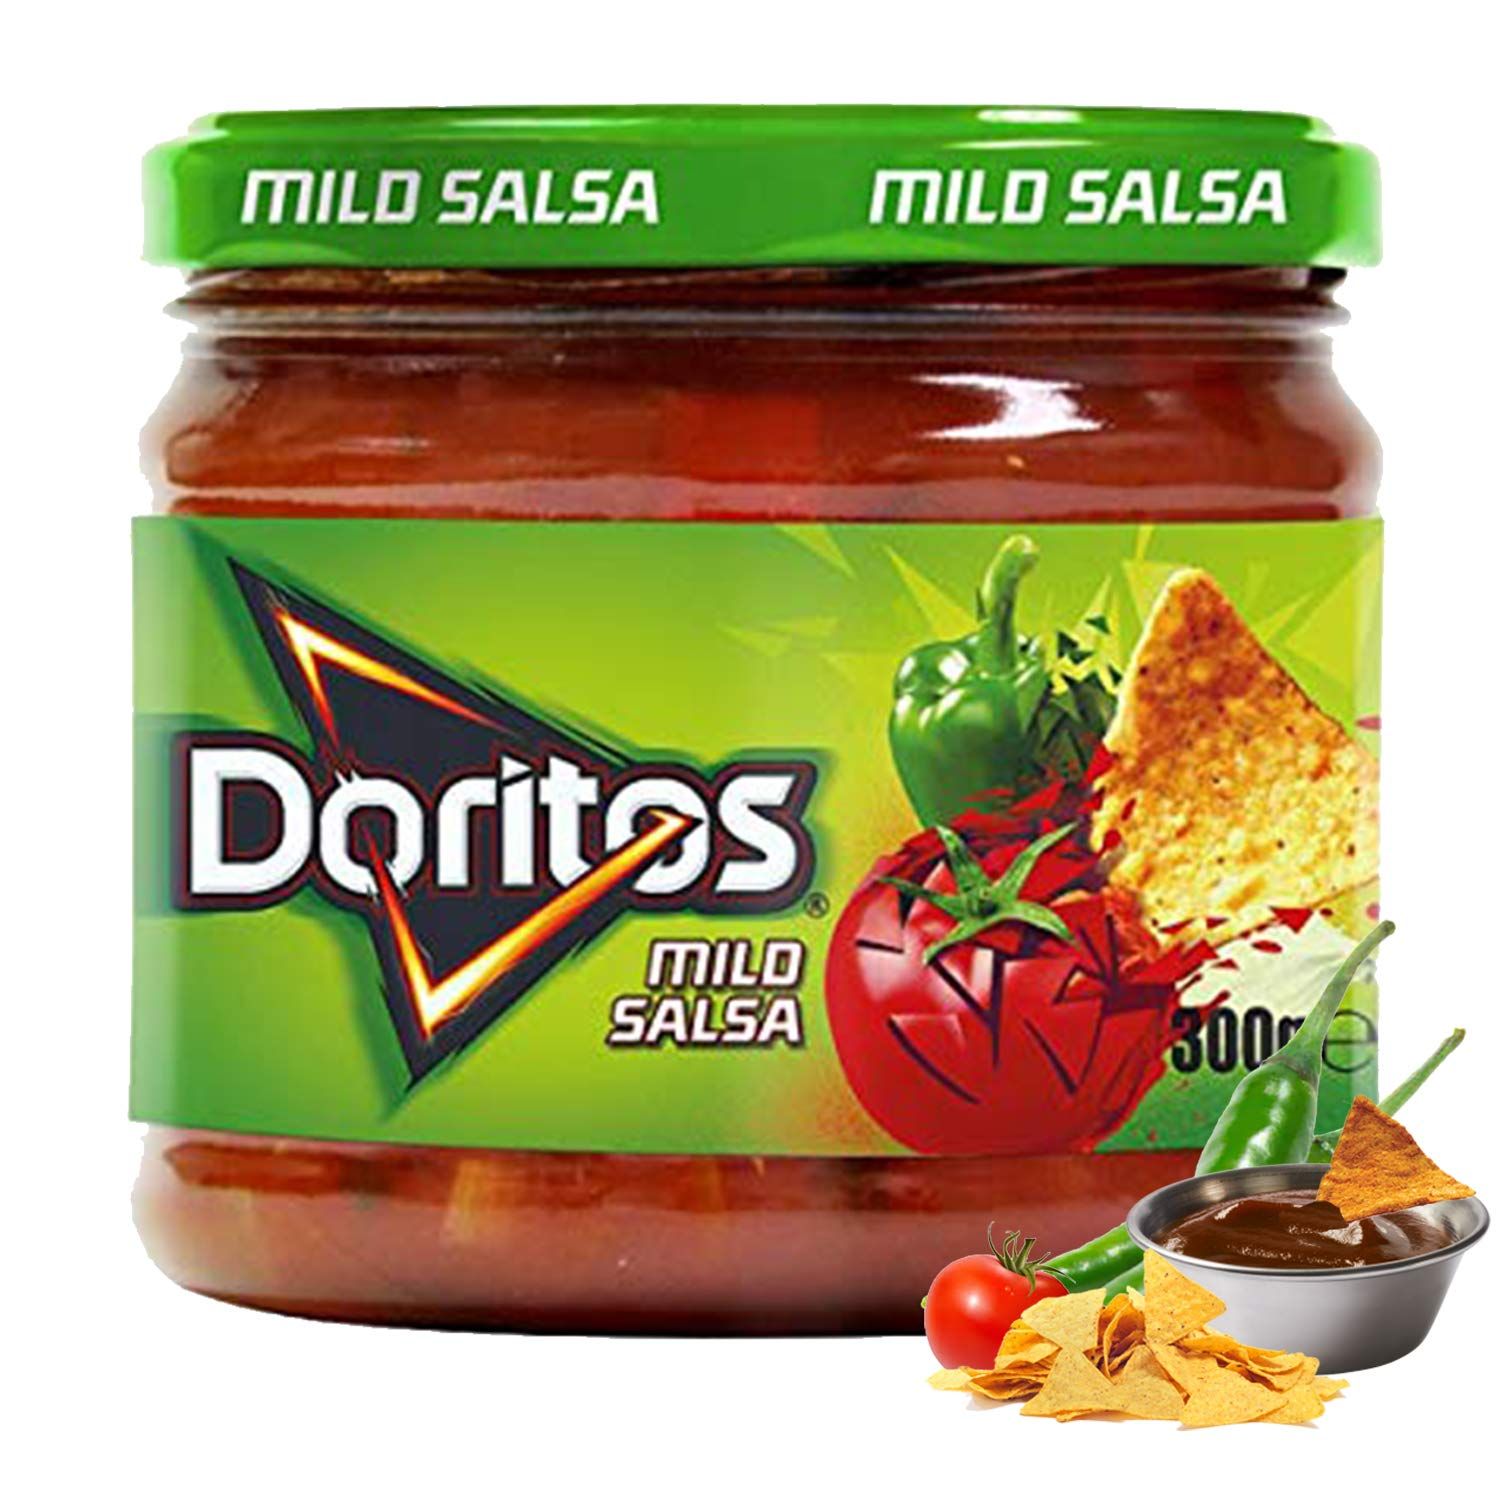 Doritos Mild Salsa Image